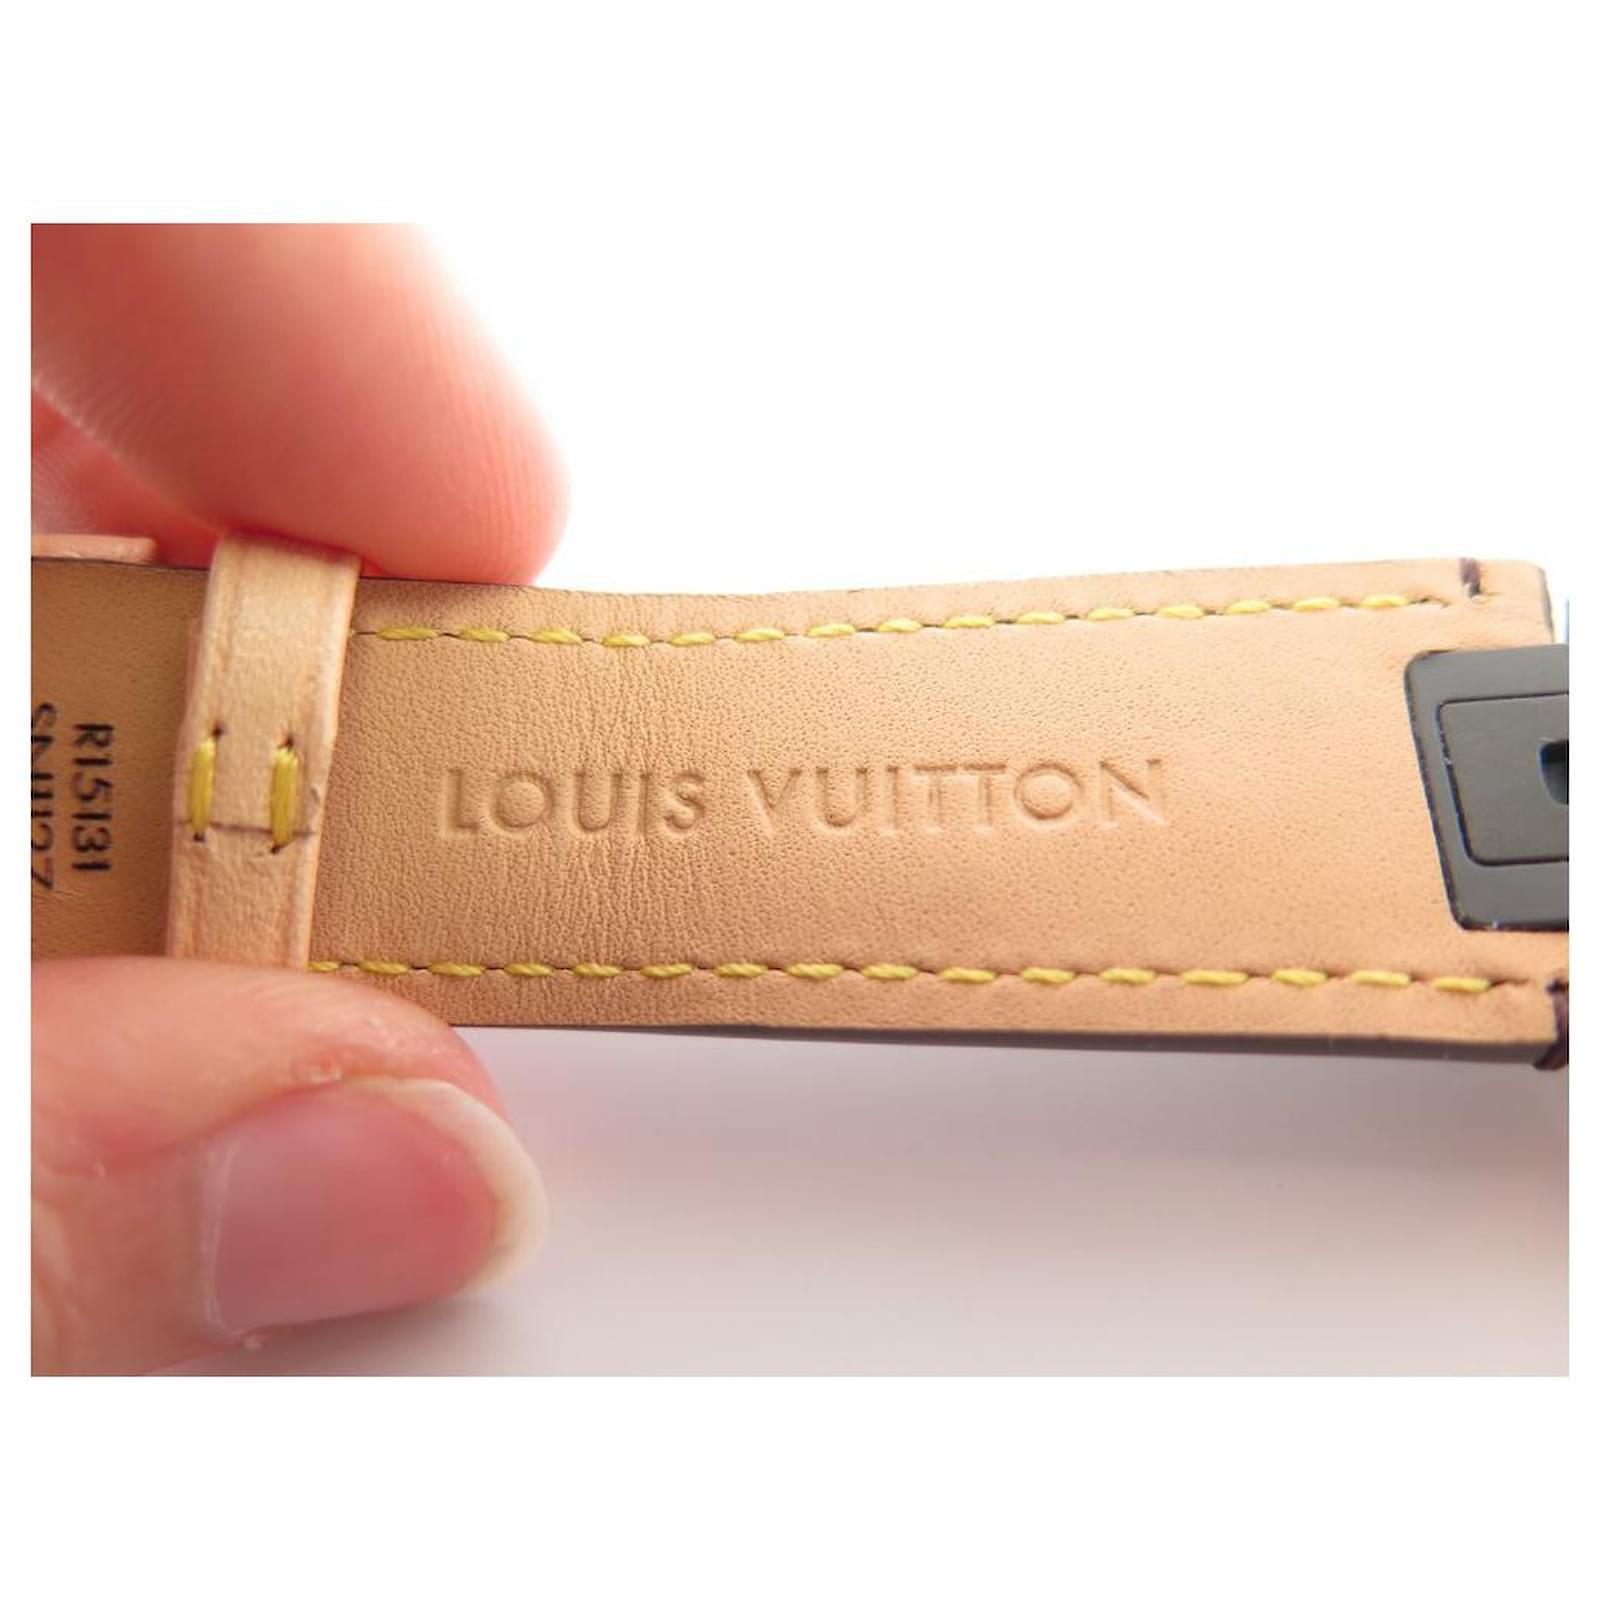 LOUIS VUITTON TAMBOUR Q WATCH1111 39 MM QUARTZ STEEL & LEATHER +